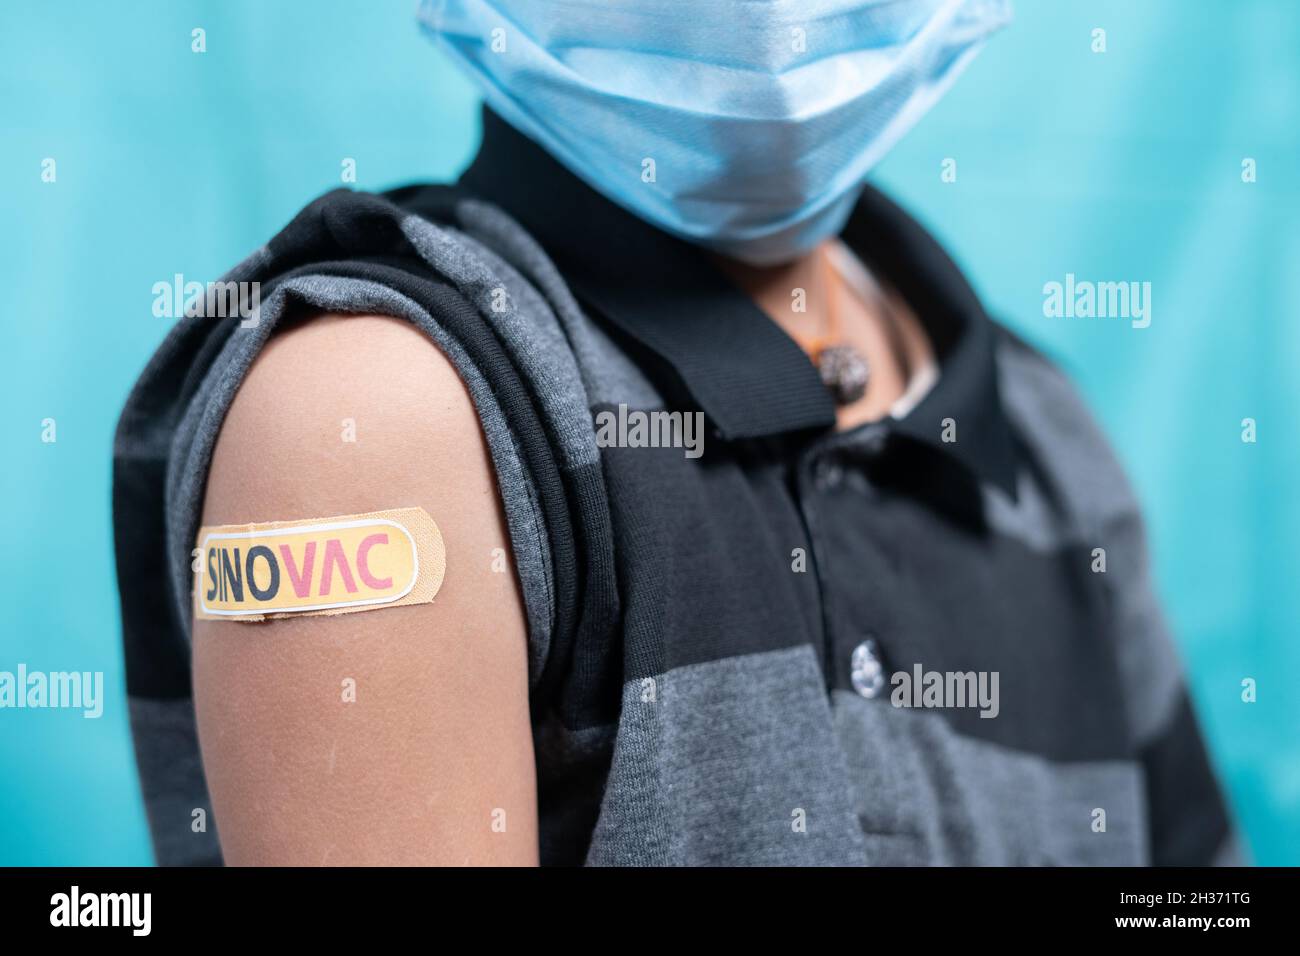 Maski, India - October 26, 2021 : kid with medical face mask showing Sinovac vaccine bandage on shoulder, Coronavirus or covid vaccination for Stock Photo